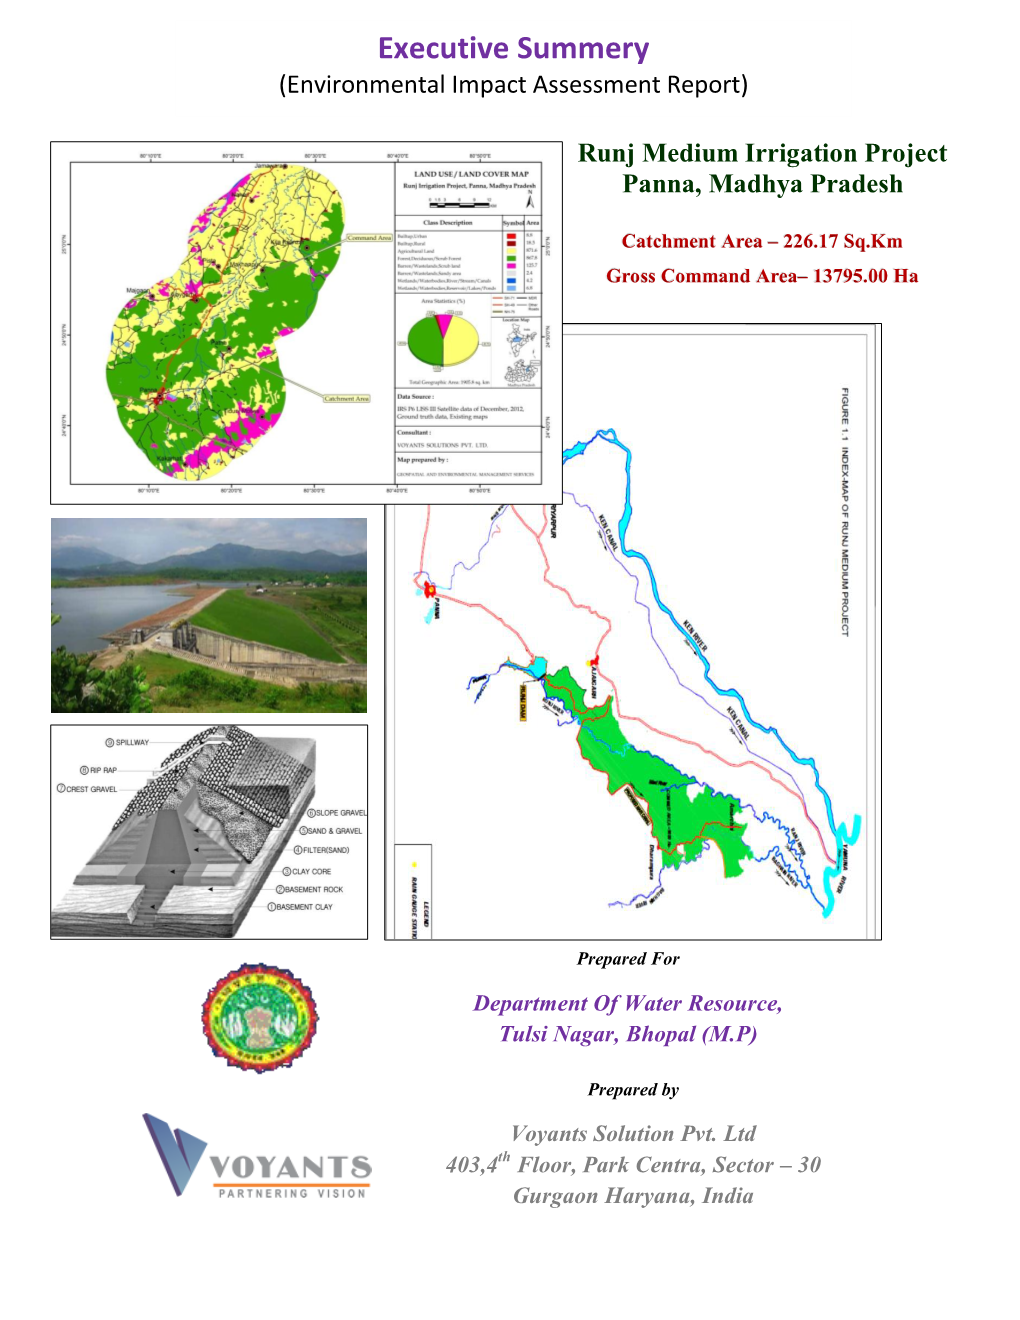 Runj Medium Irrigation Project Panna, Madhya Pradesh